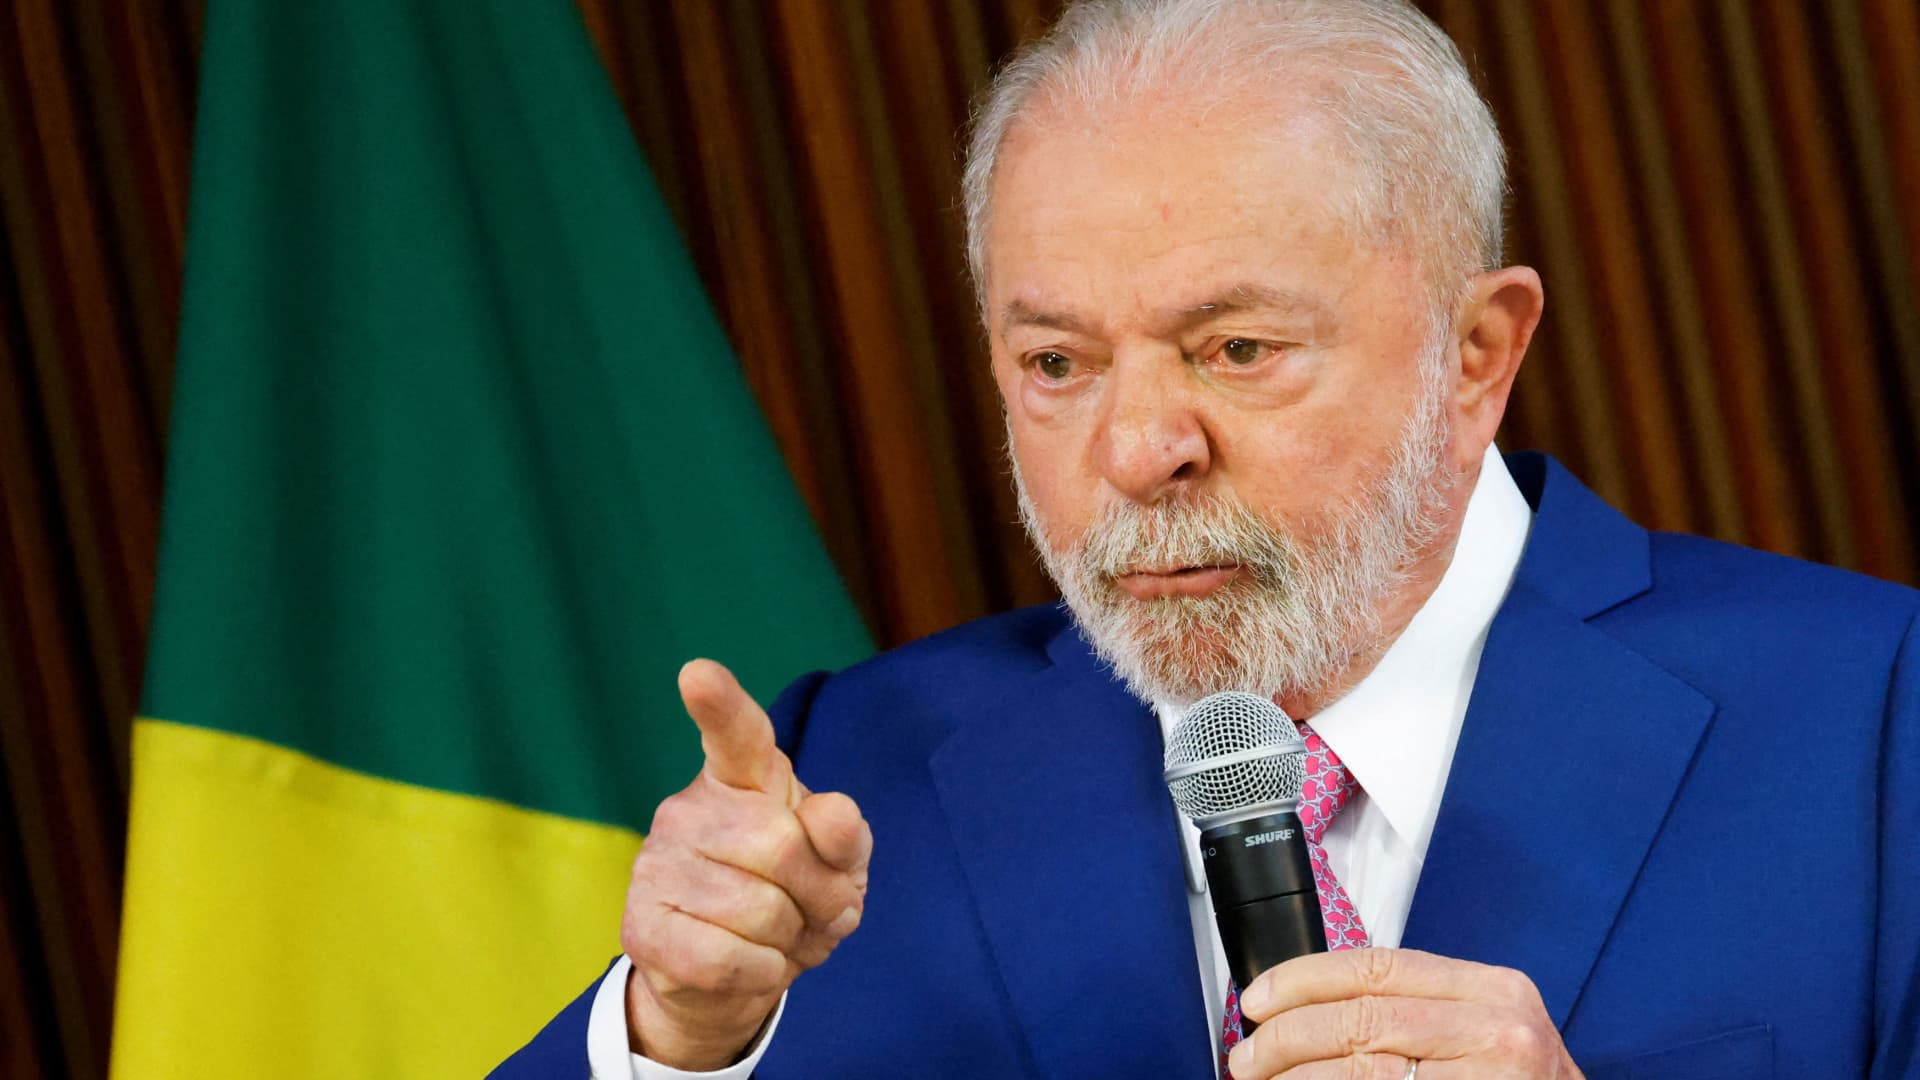 Brazil's President Luiz Inacio Lula da Silva attends a ministerial meeting at the Planalto Palace in Brasilia, Brazil January 6, 2023. 